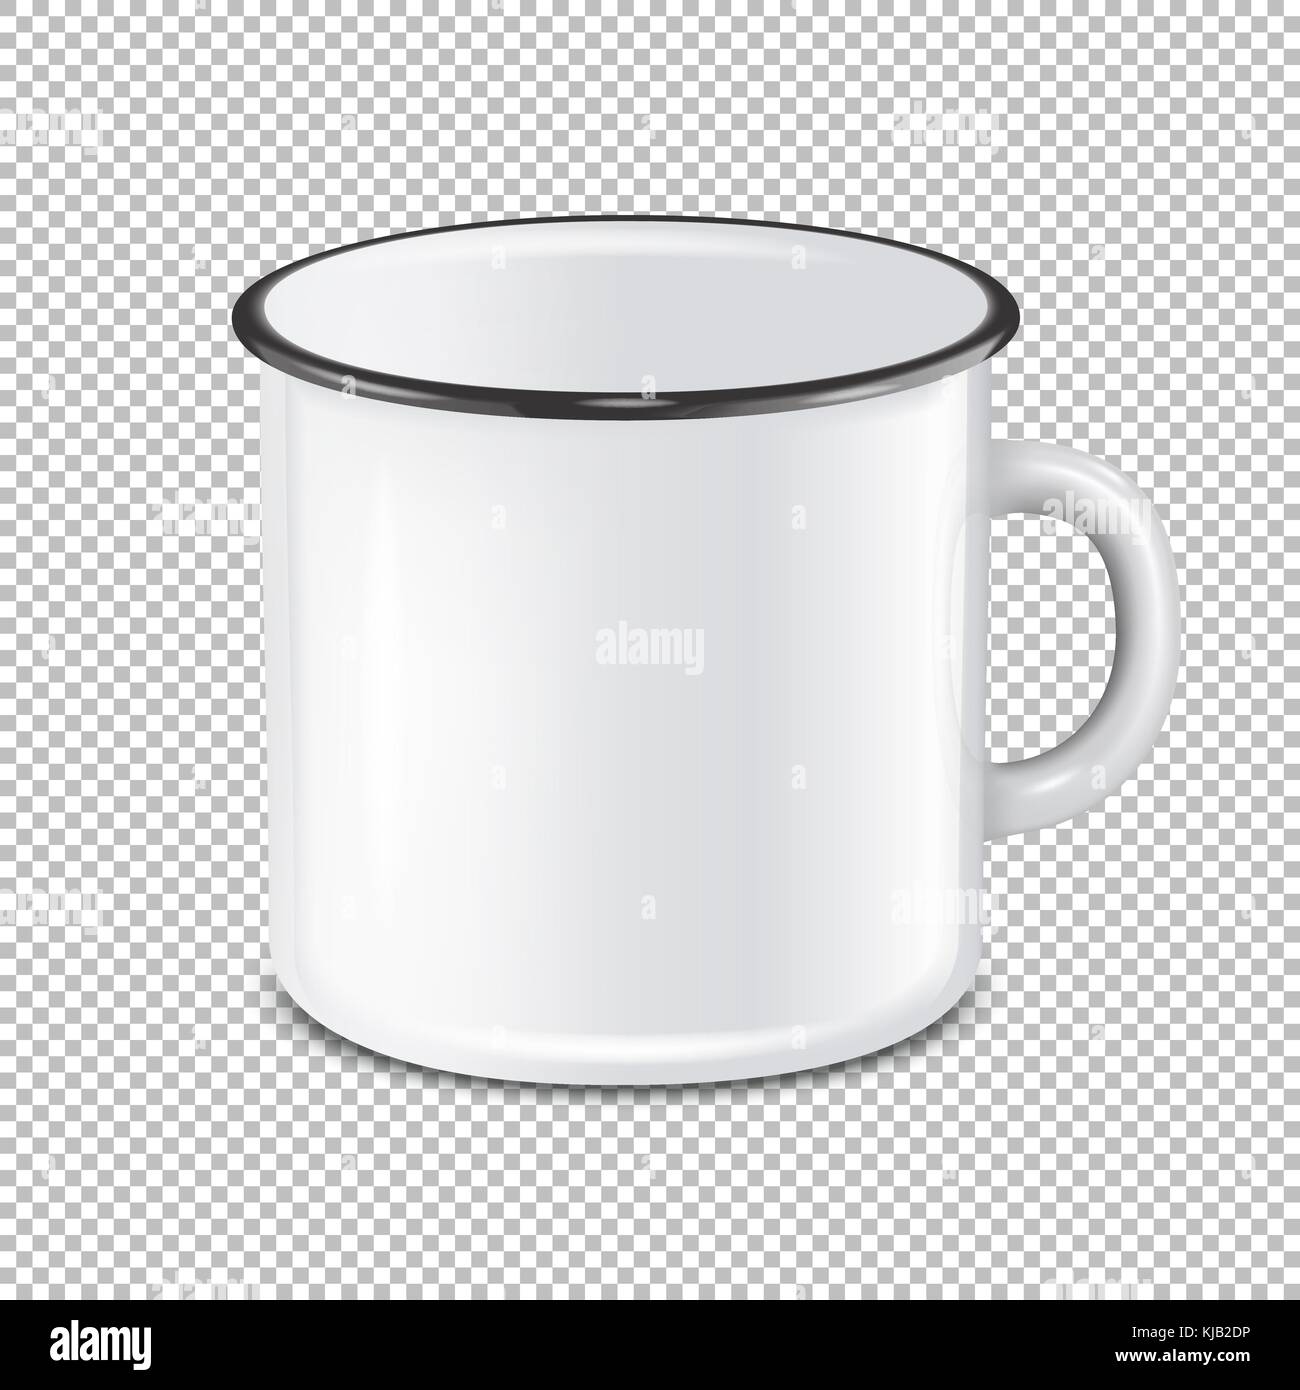 https://c8.alamy.com/comp/KJB2DP/vector-realistic-enamel-metal-white-mug-isolated-on-transparent-background-KJB2DP.jpg